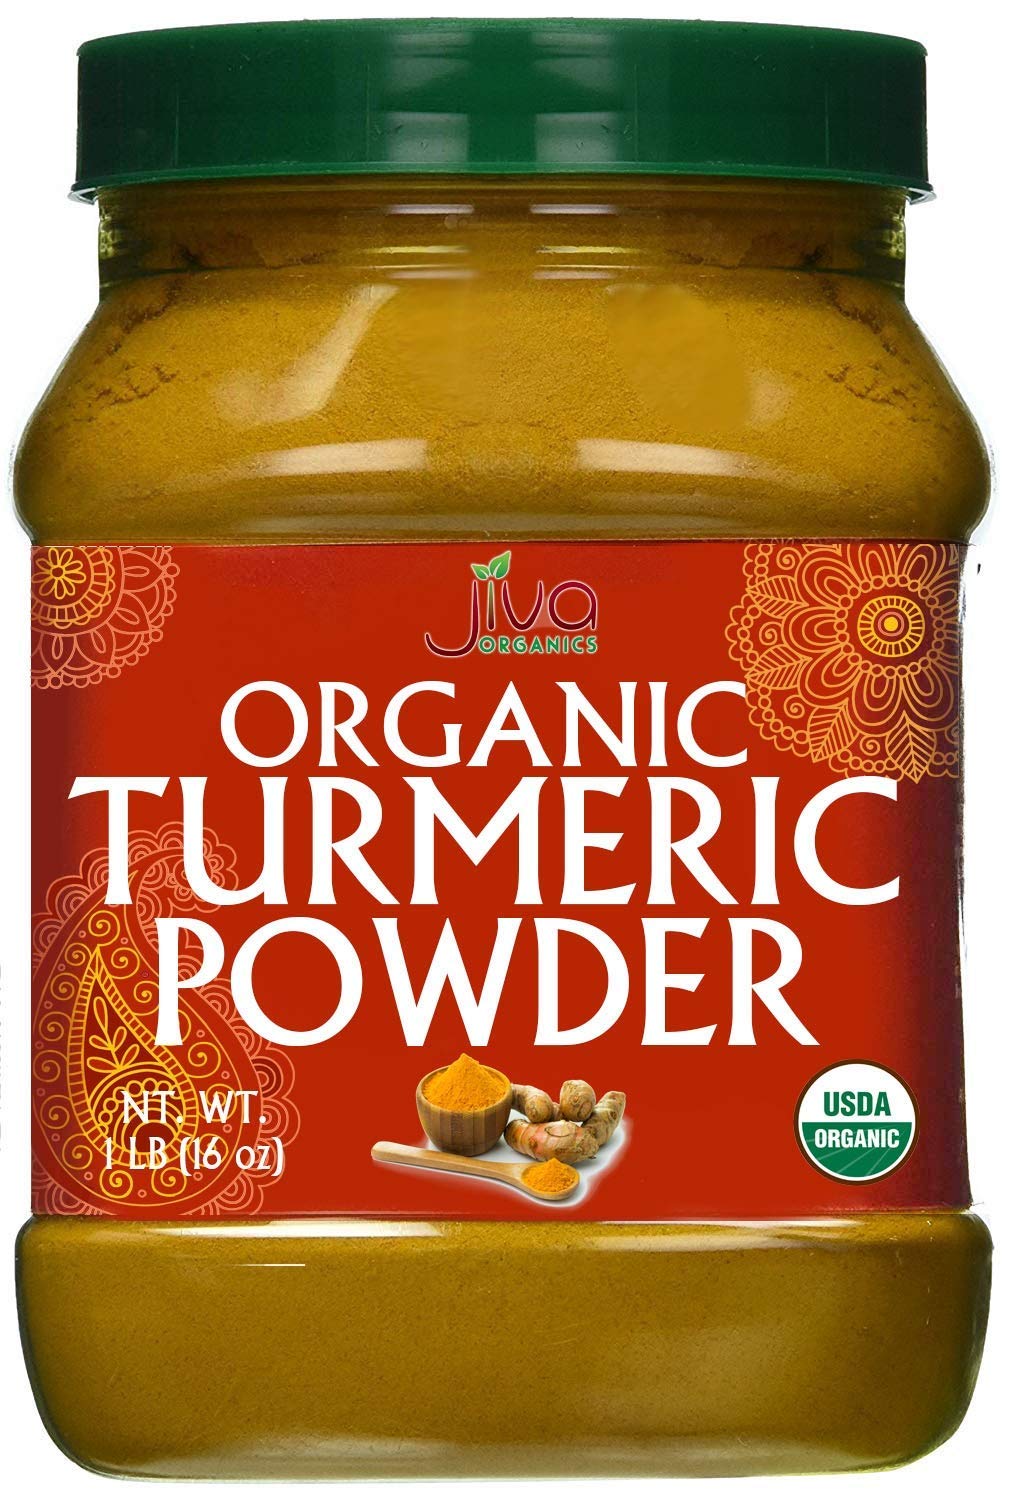 Jiva Organics Indigo Powder – Jivaorganicfoods